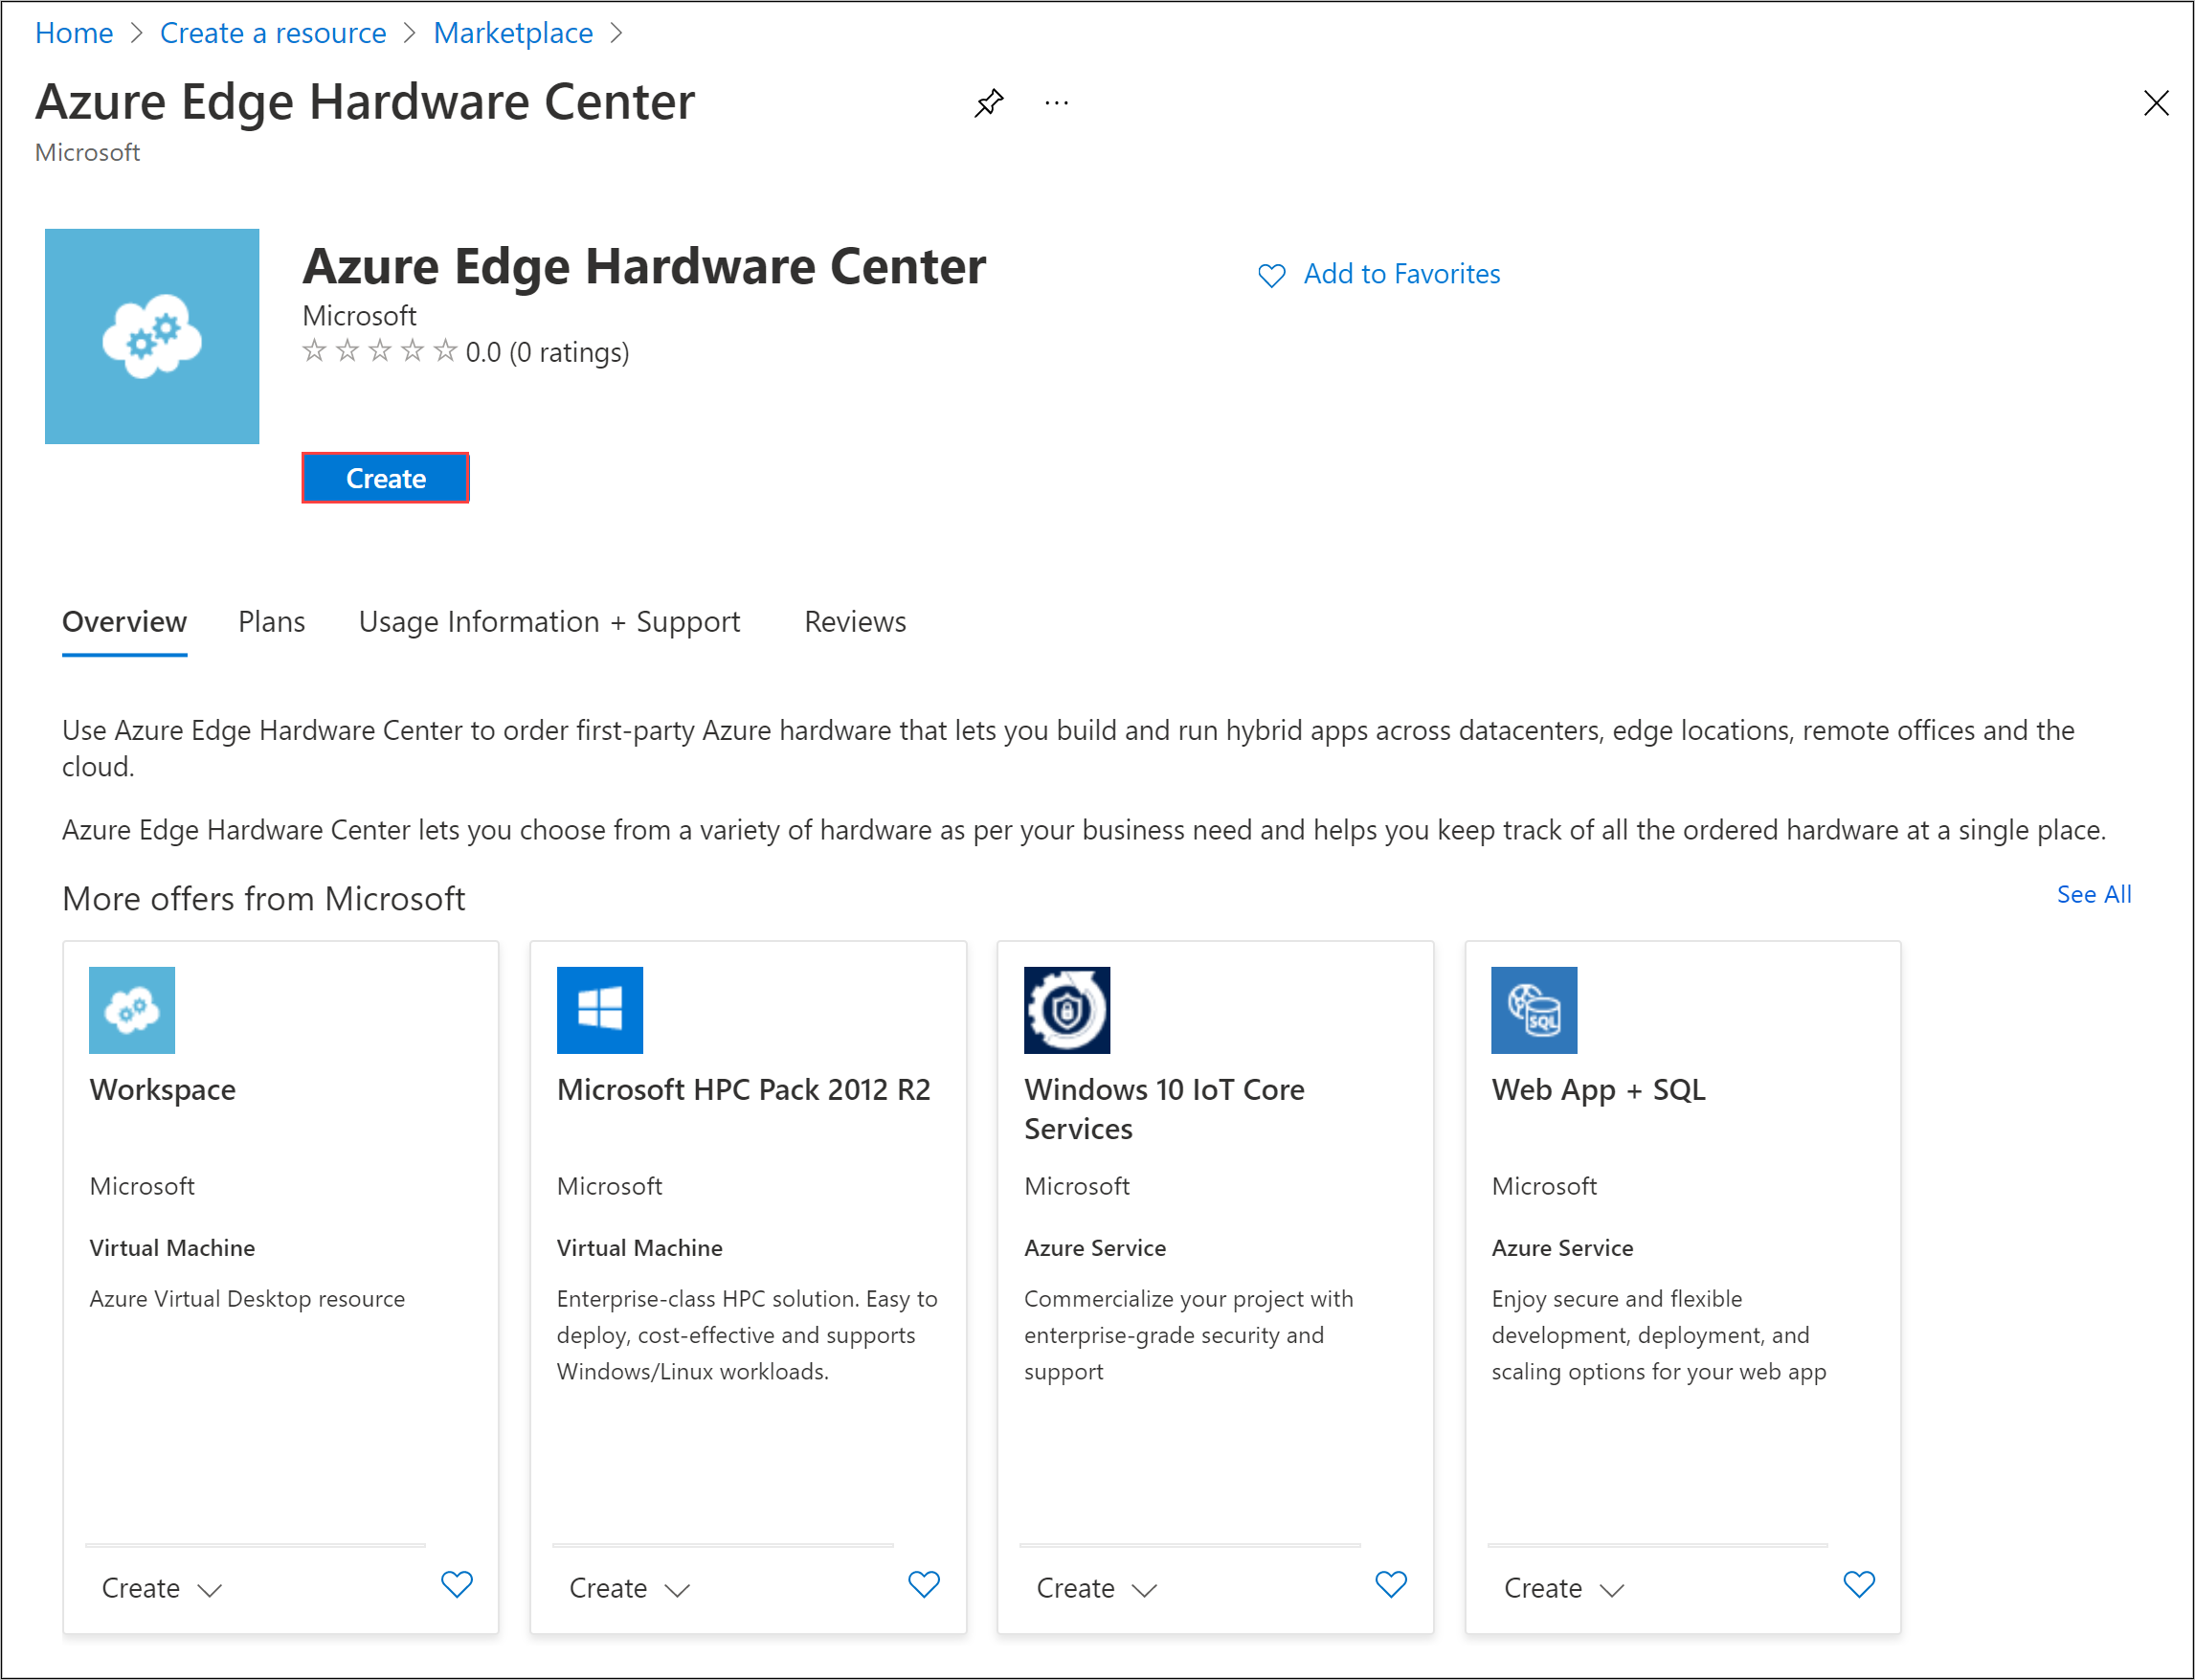 Azure Stack Edge Hardware Center 홈페이지의 스크린샷. [만들기] 단추가 강조 표시되어 있습니다.